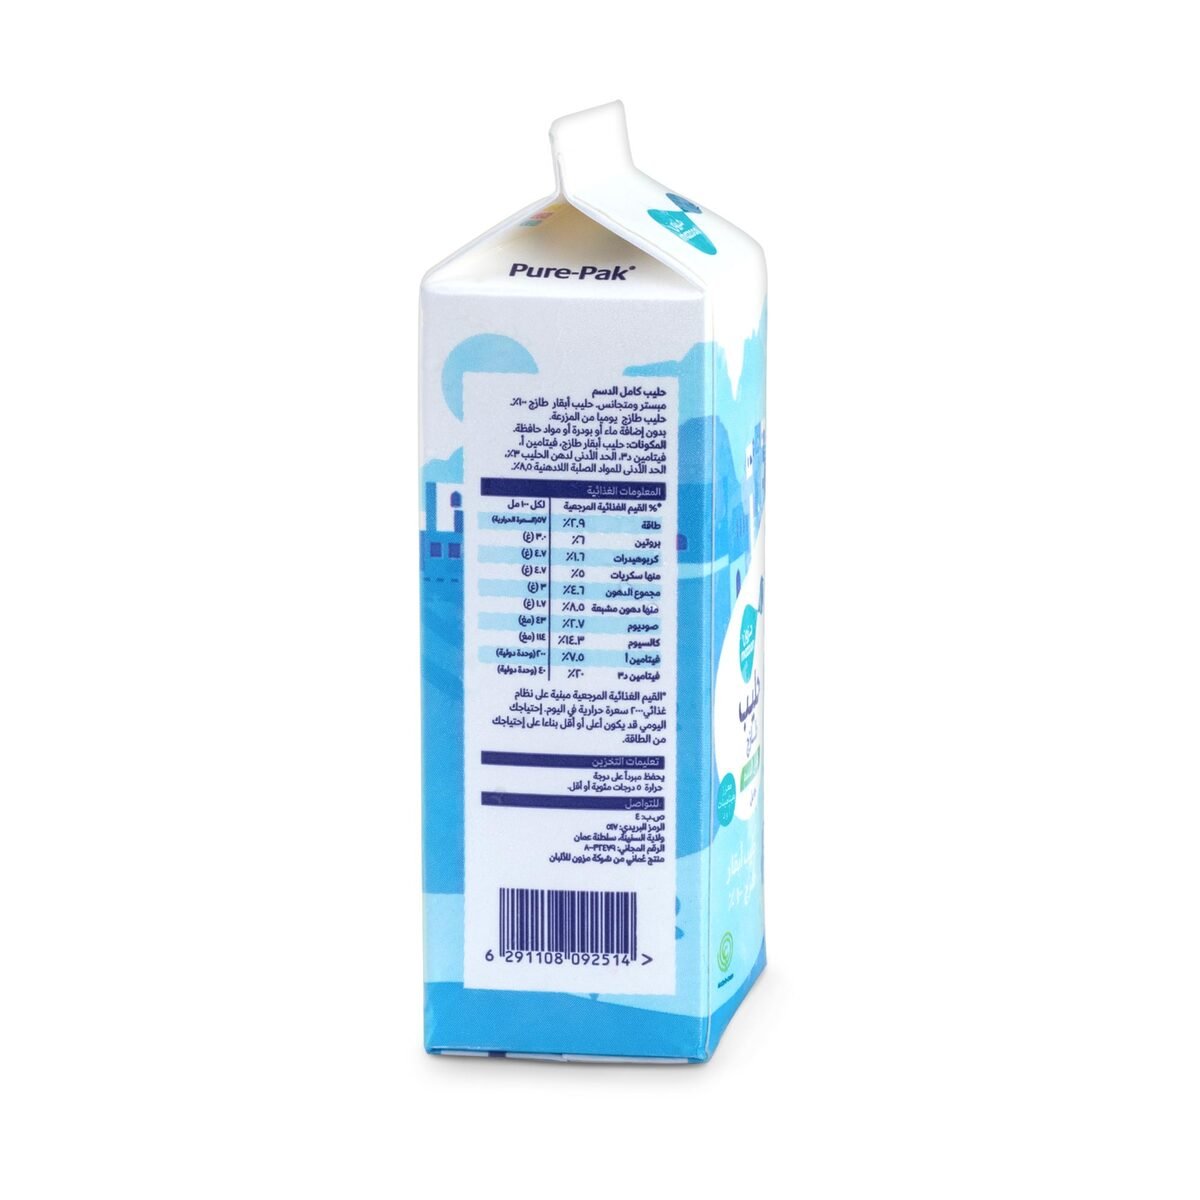 Mazoon Fresh Milk Full Fat 500ml